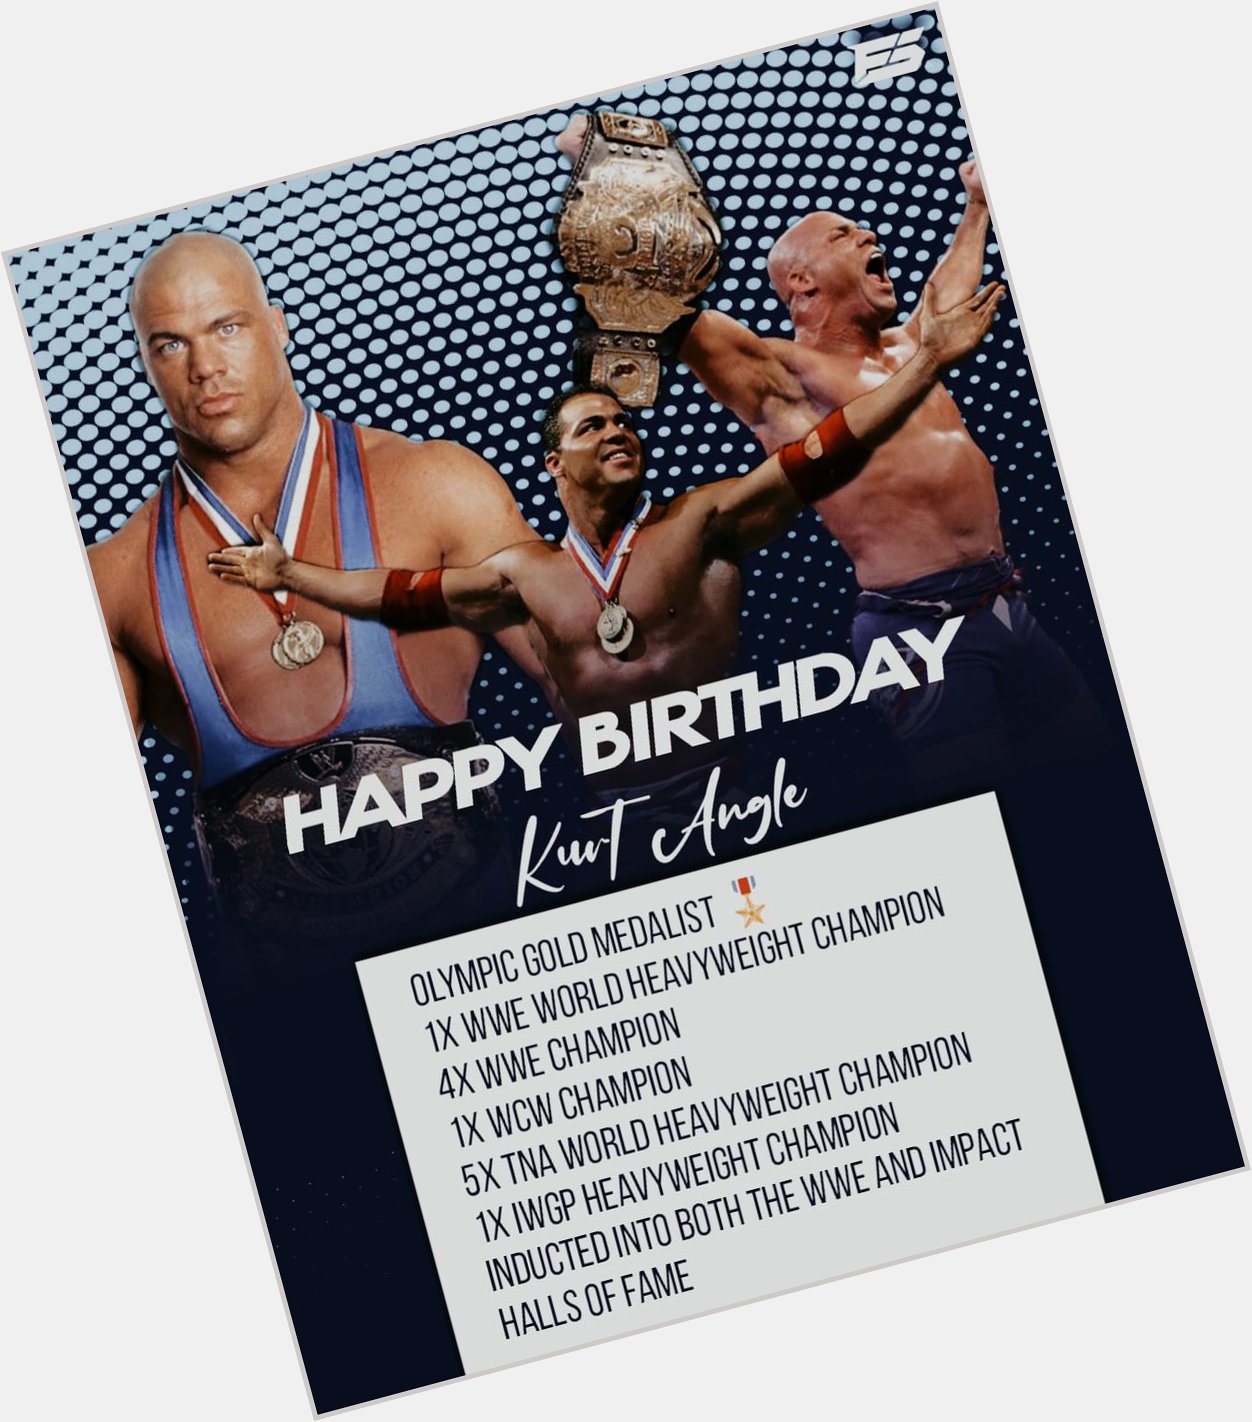 Happy Birthday Kurt Angle .
.
.      